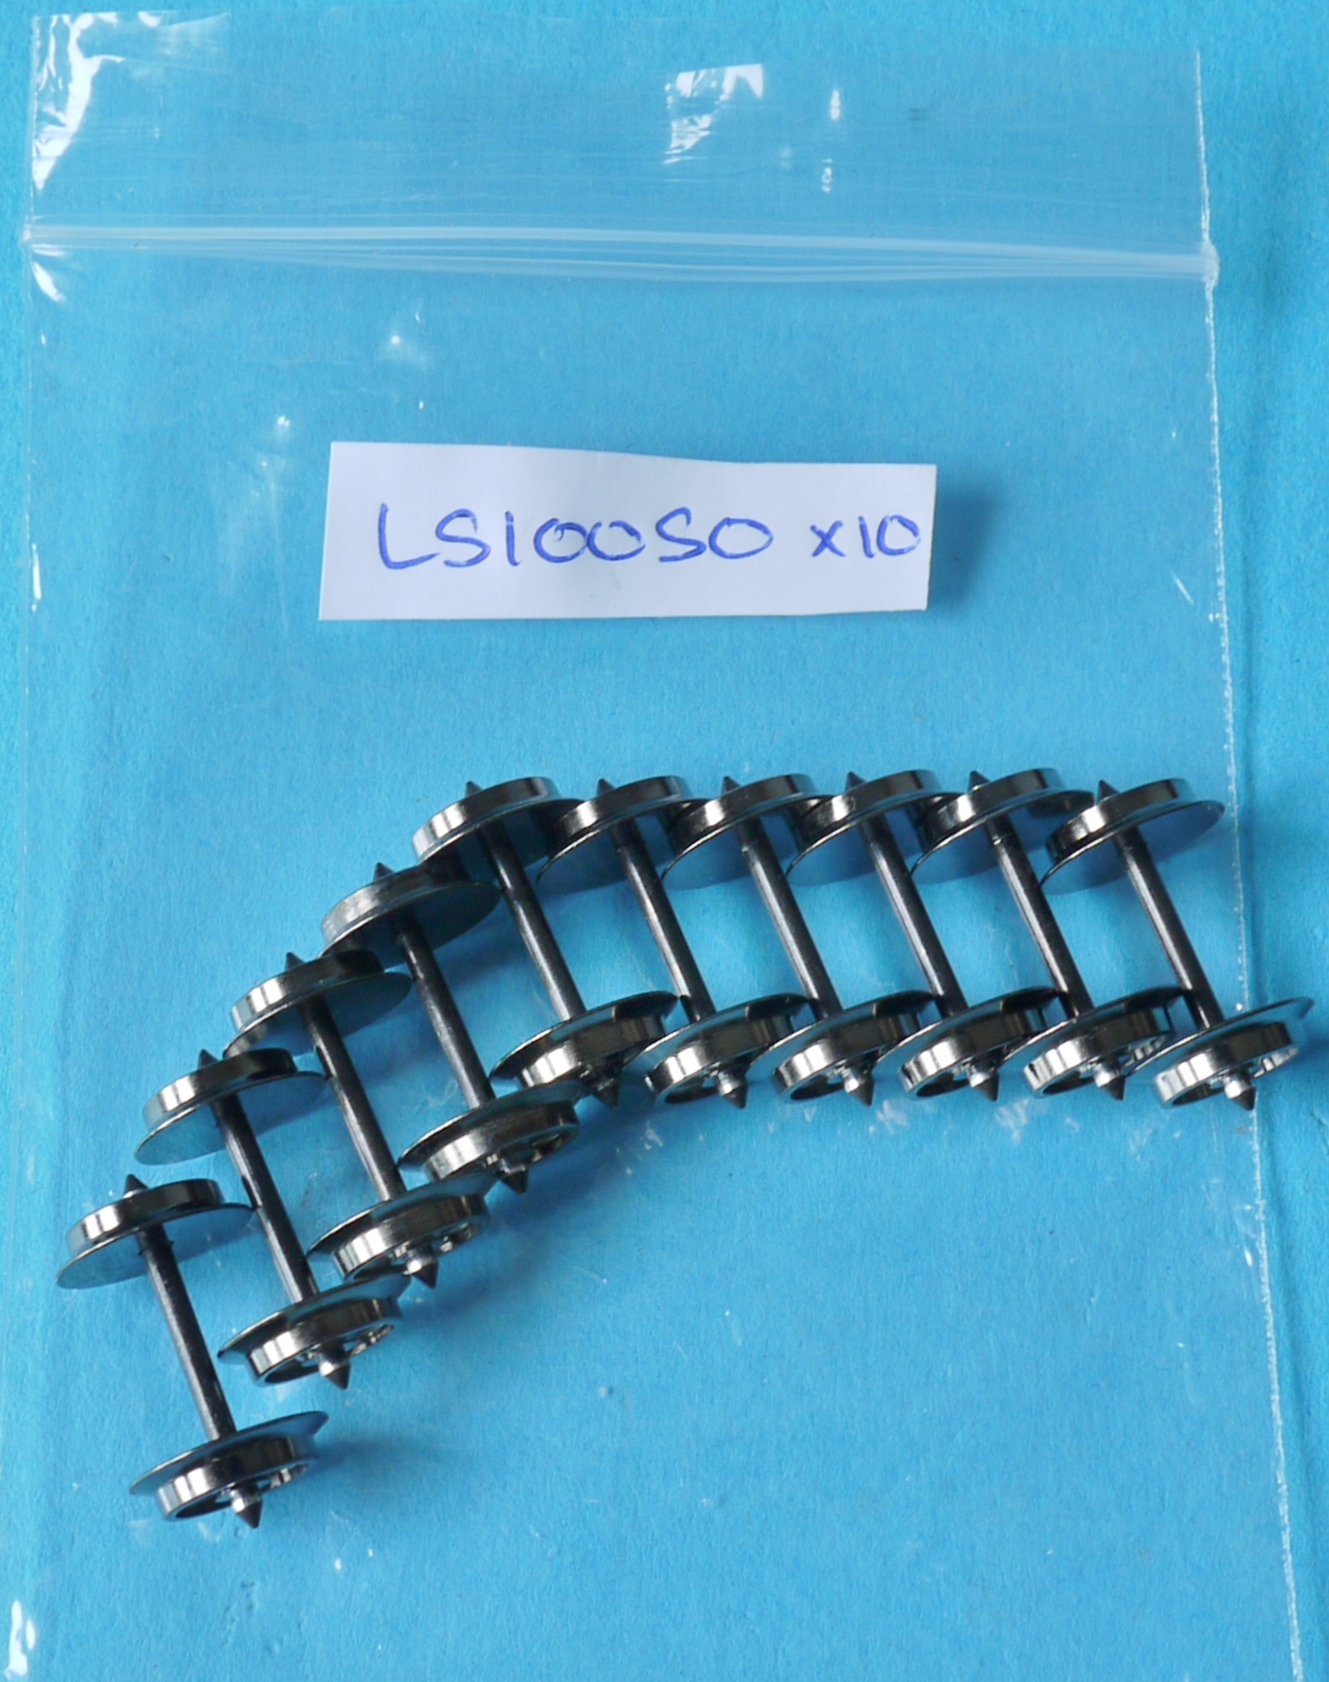 L510050 Liliput Spare 10 × Wheels + Axles 24.6mm Axles 13.6mm Diameter HO Gauge